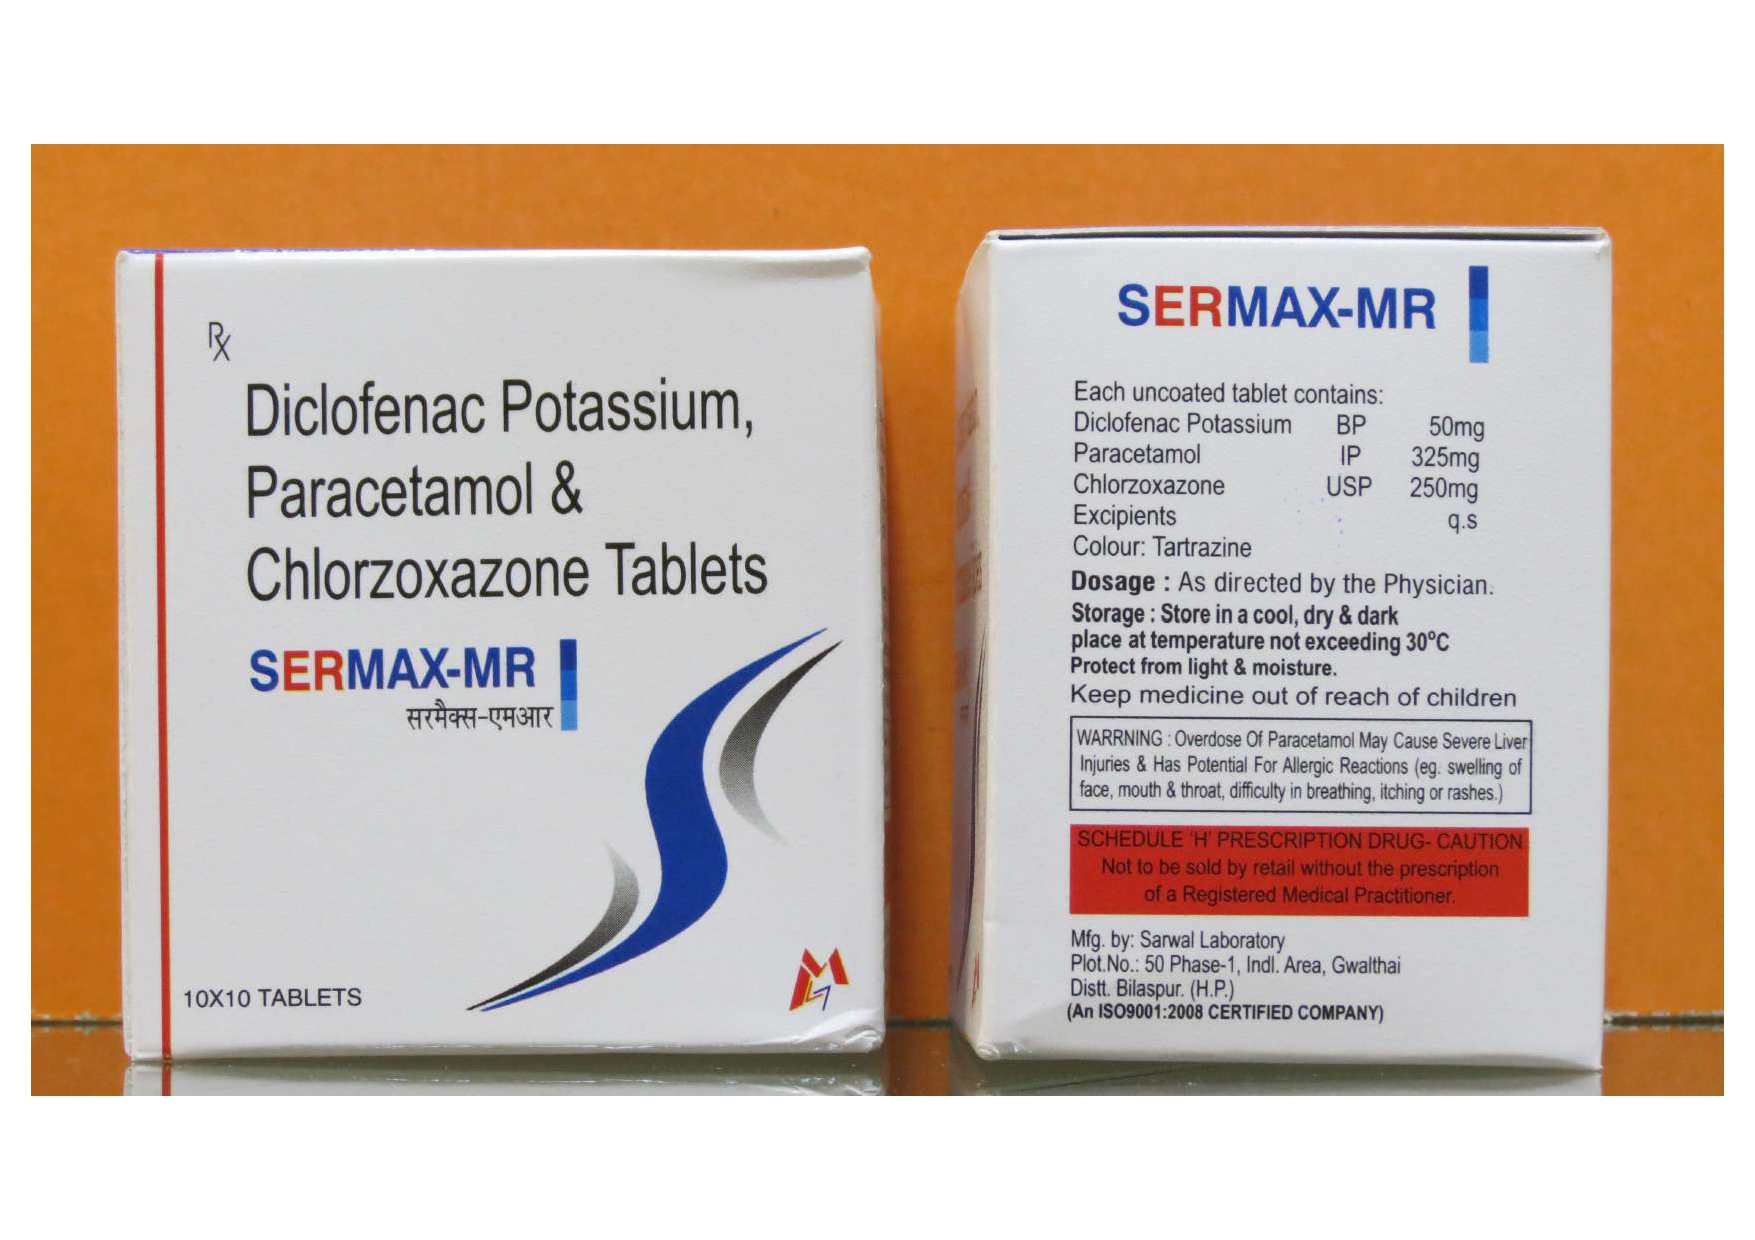 diclofenac potassium ip 50mg + paracetamol ip 325mg + chlorzoxazone usp 250mg tablets